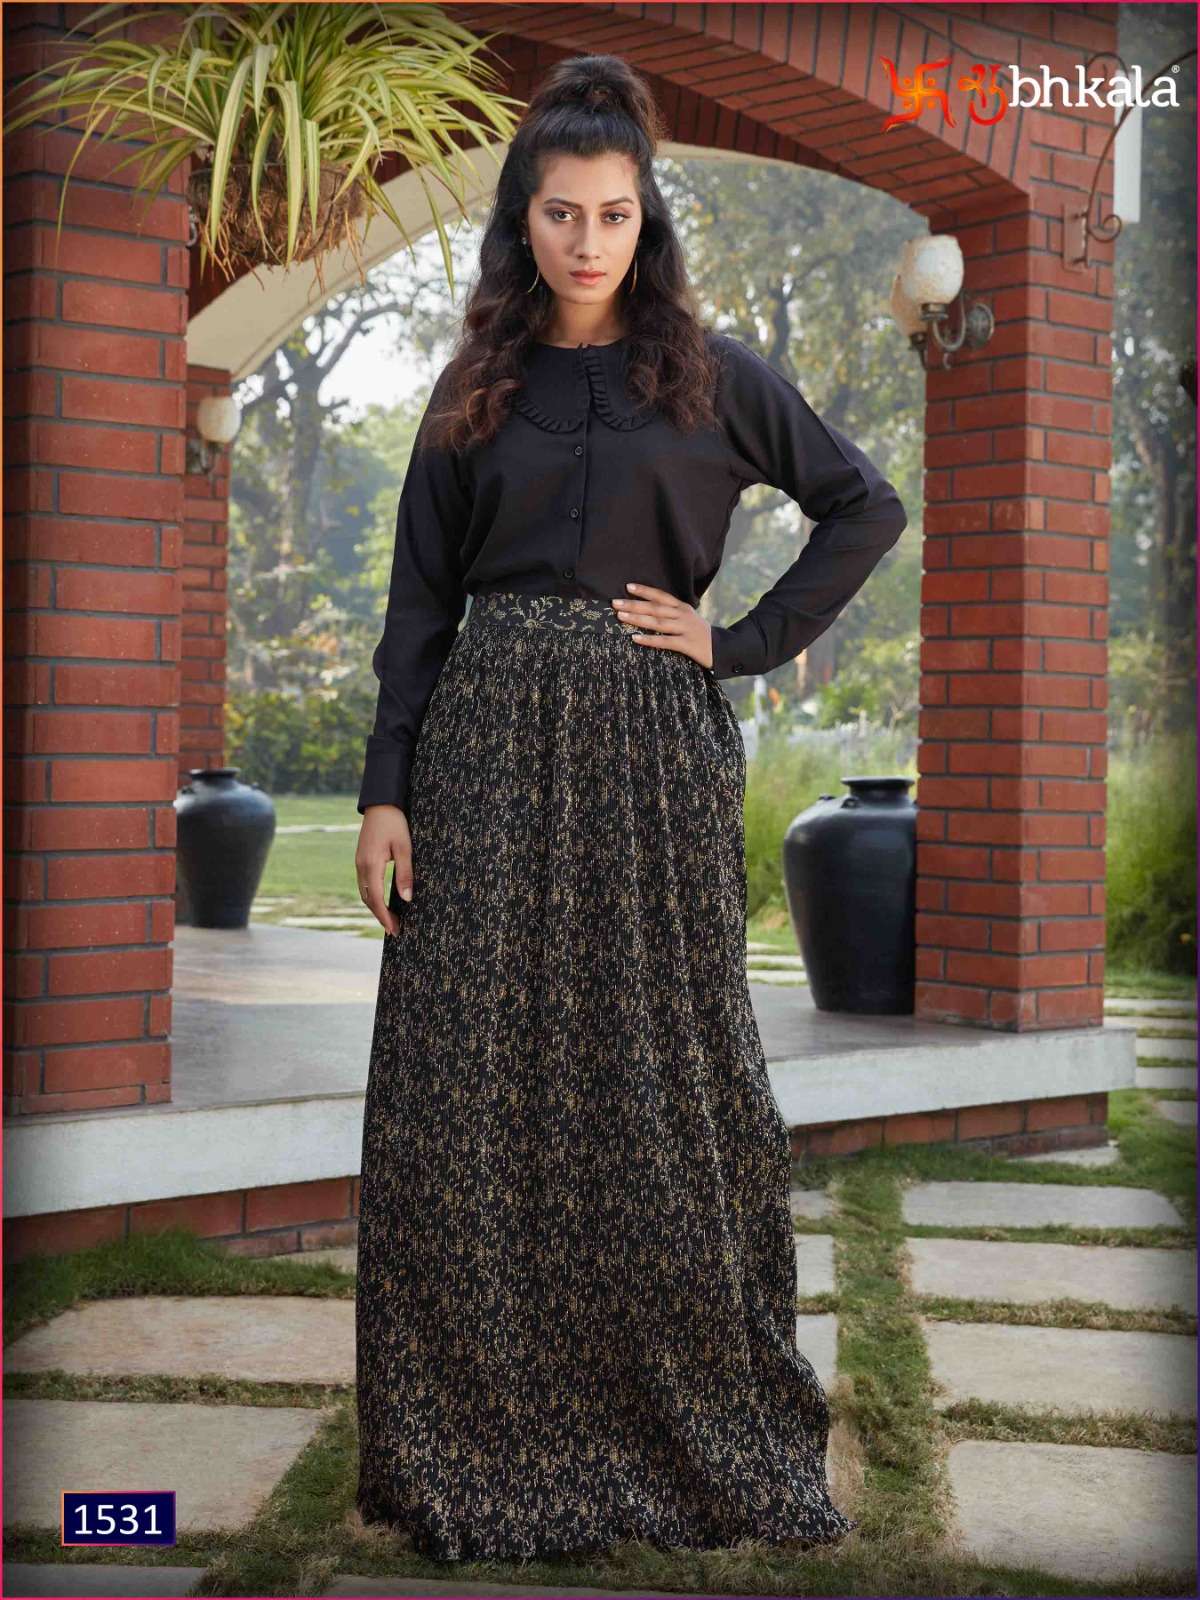 shubhkala frill and flare vol 2 imported fabrics elegant look top skirt catalog